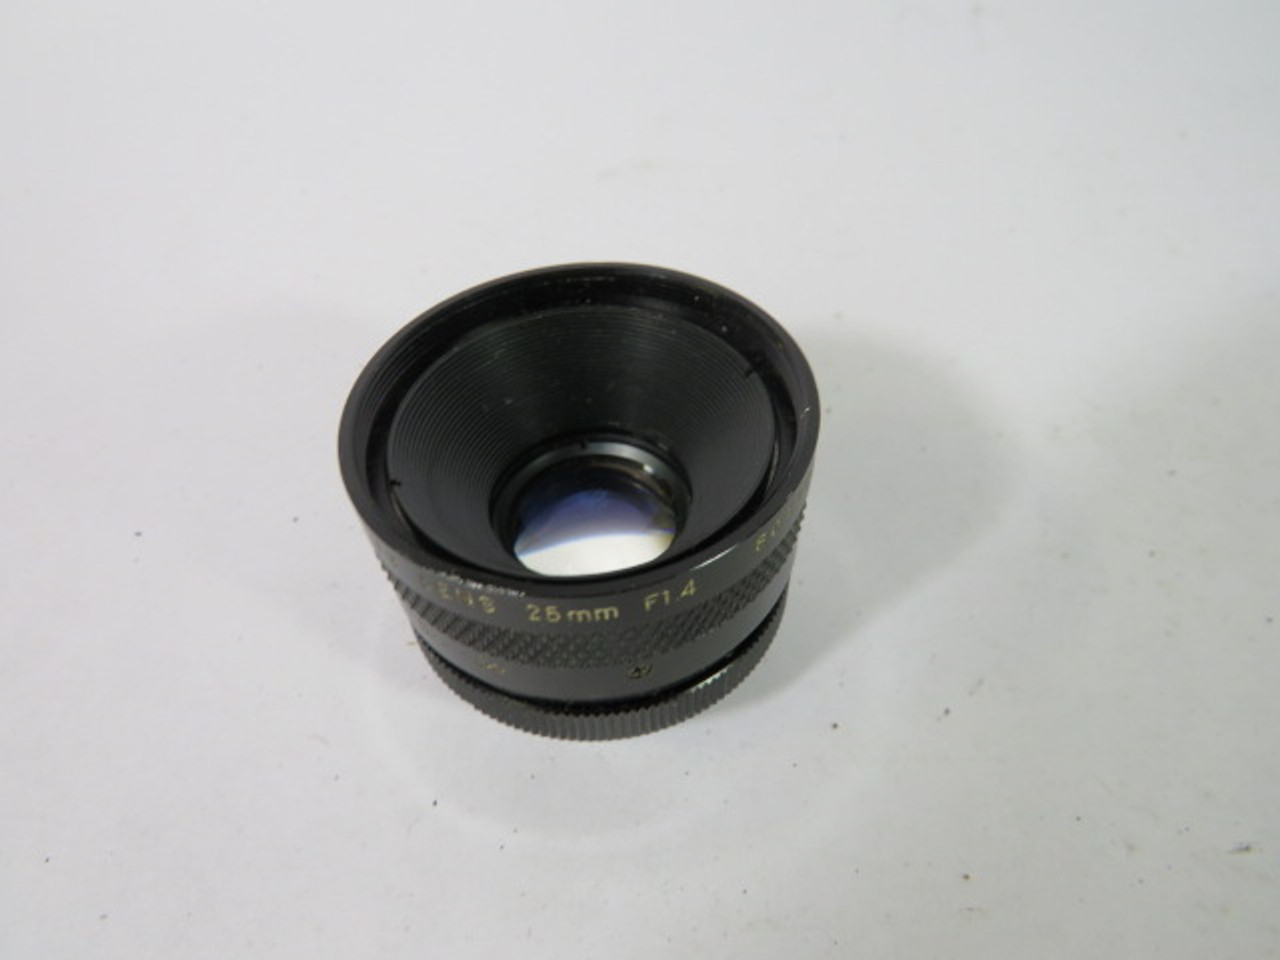 Molynx 801200 CCTV Lens 25mm F1.4 USED